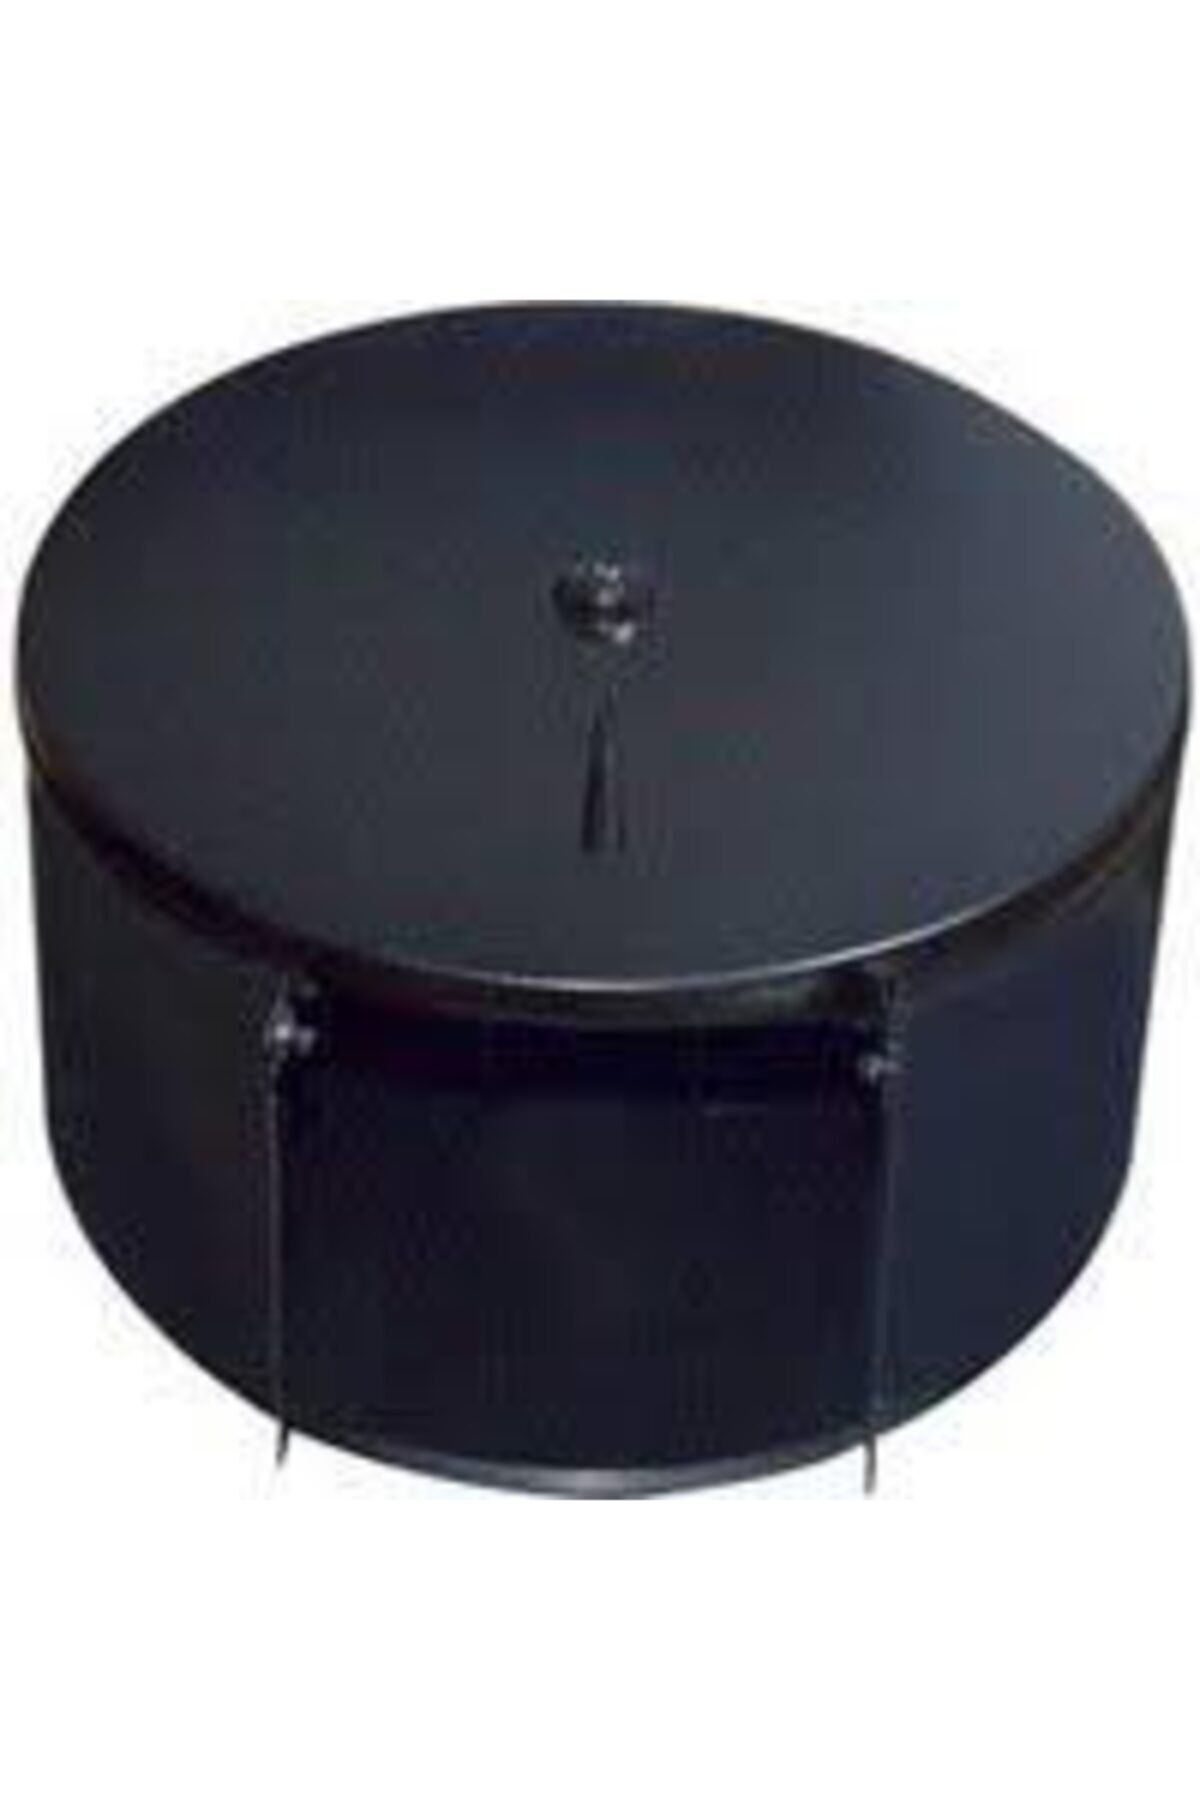 Arı Metal Peronline Mini Jumbo Tuvalet Kagıt Verici Mat Siyah